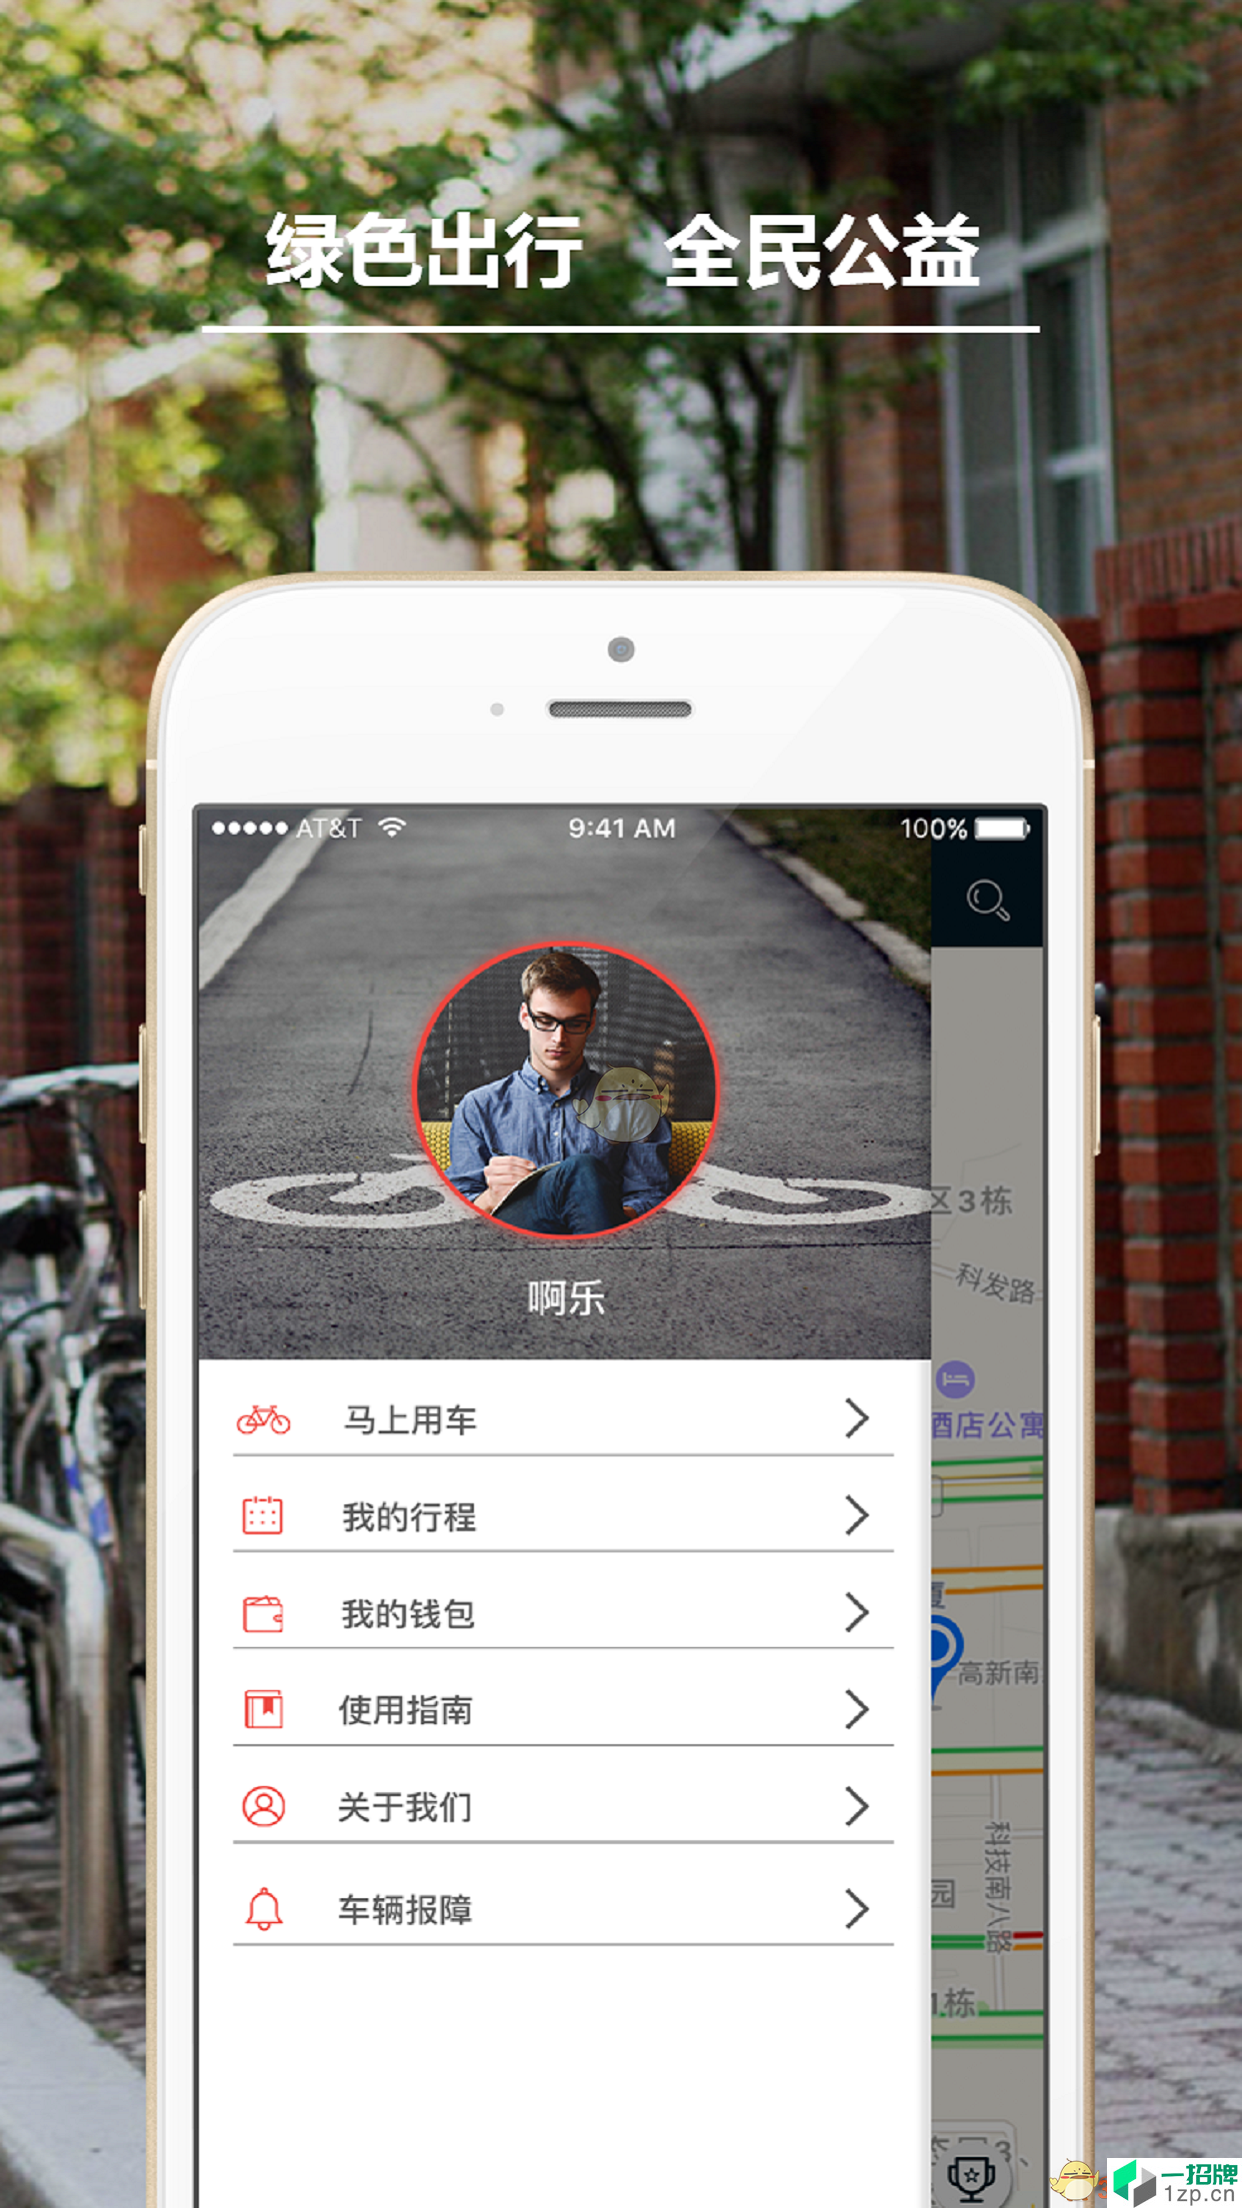 funbike单车app安卓版下载_funbike单车app安卓软件应用下载